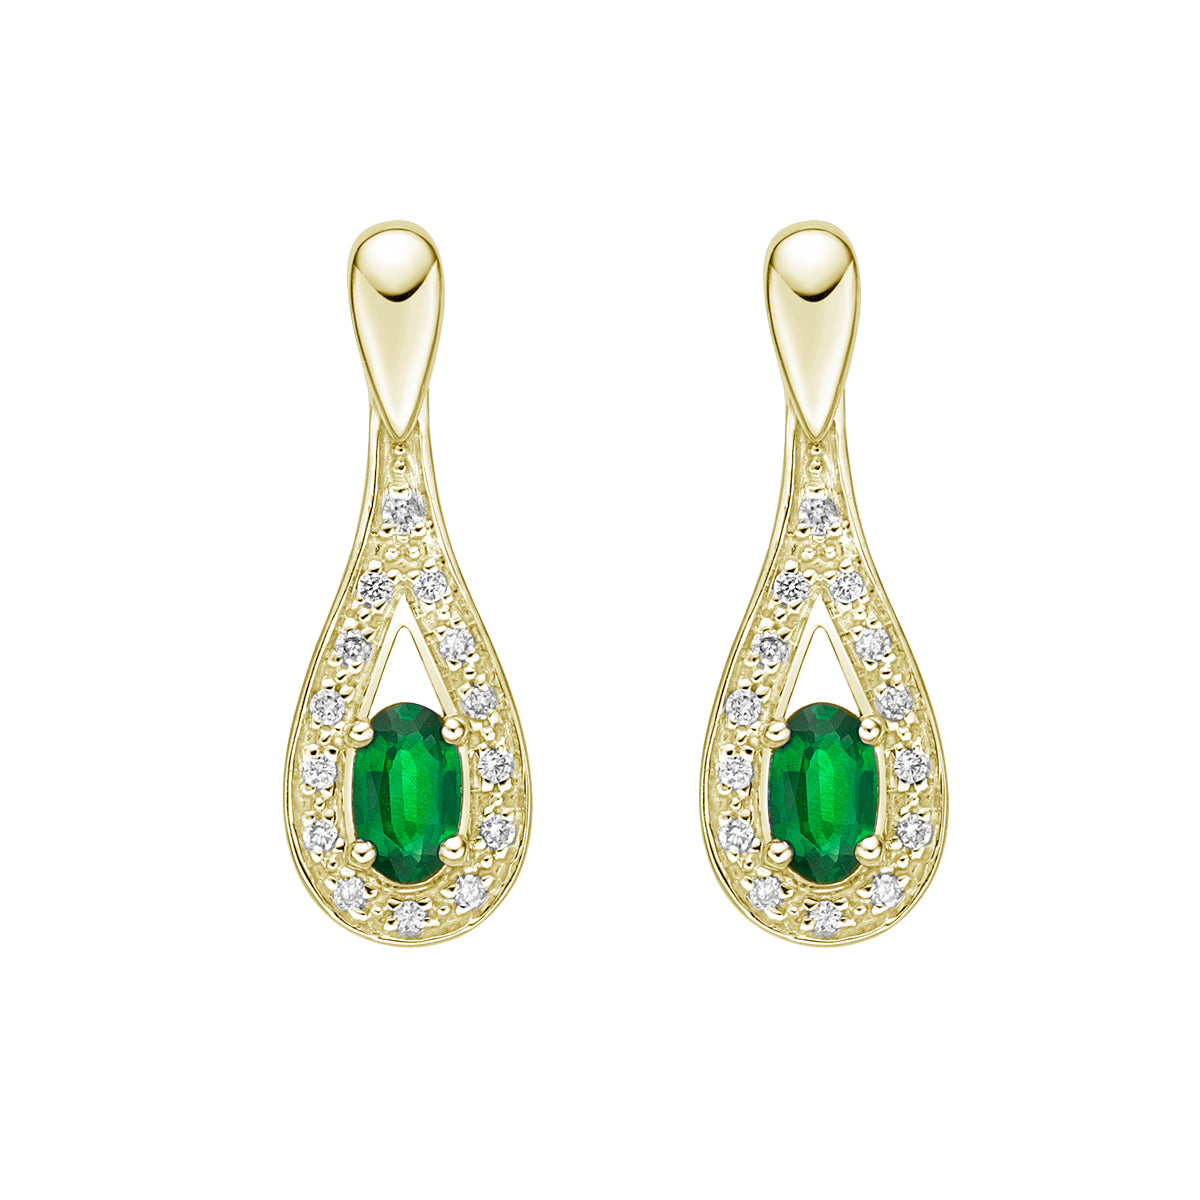 10K Yellow Gold Emerald Earrings with Diamond Halo